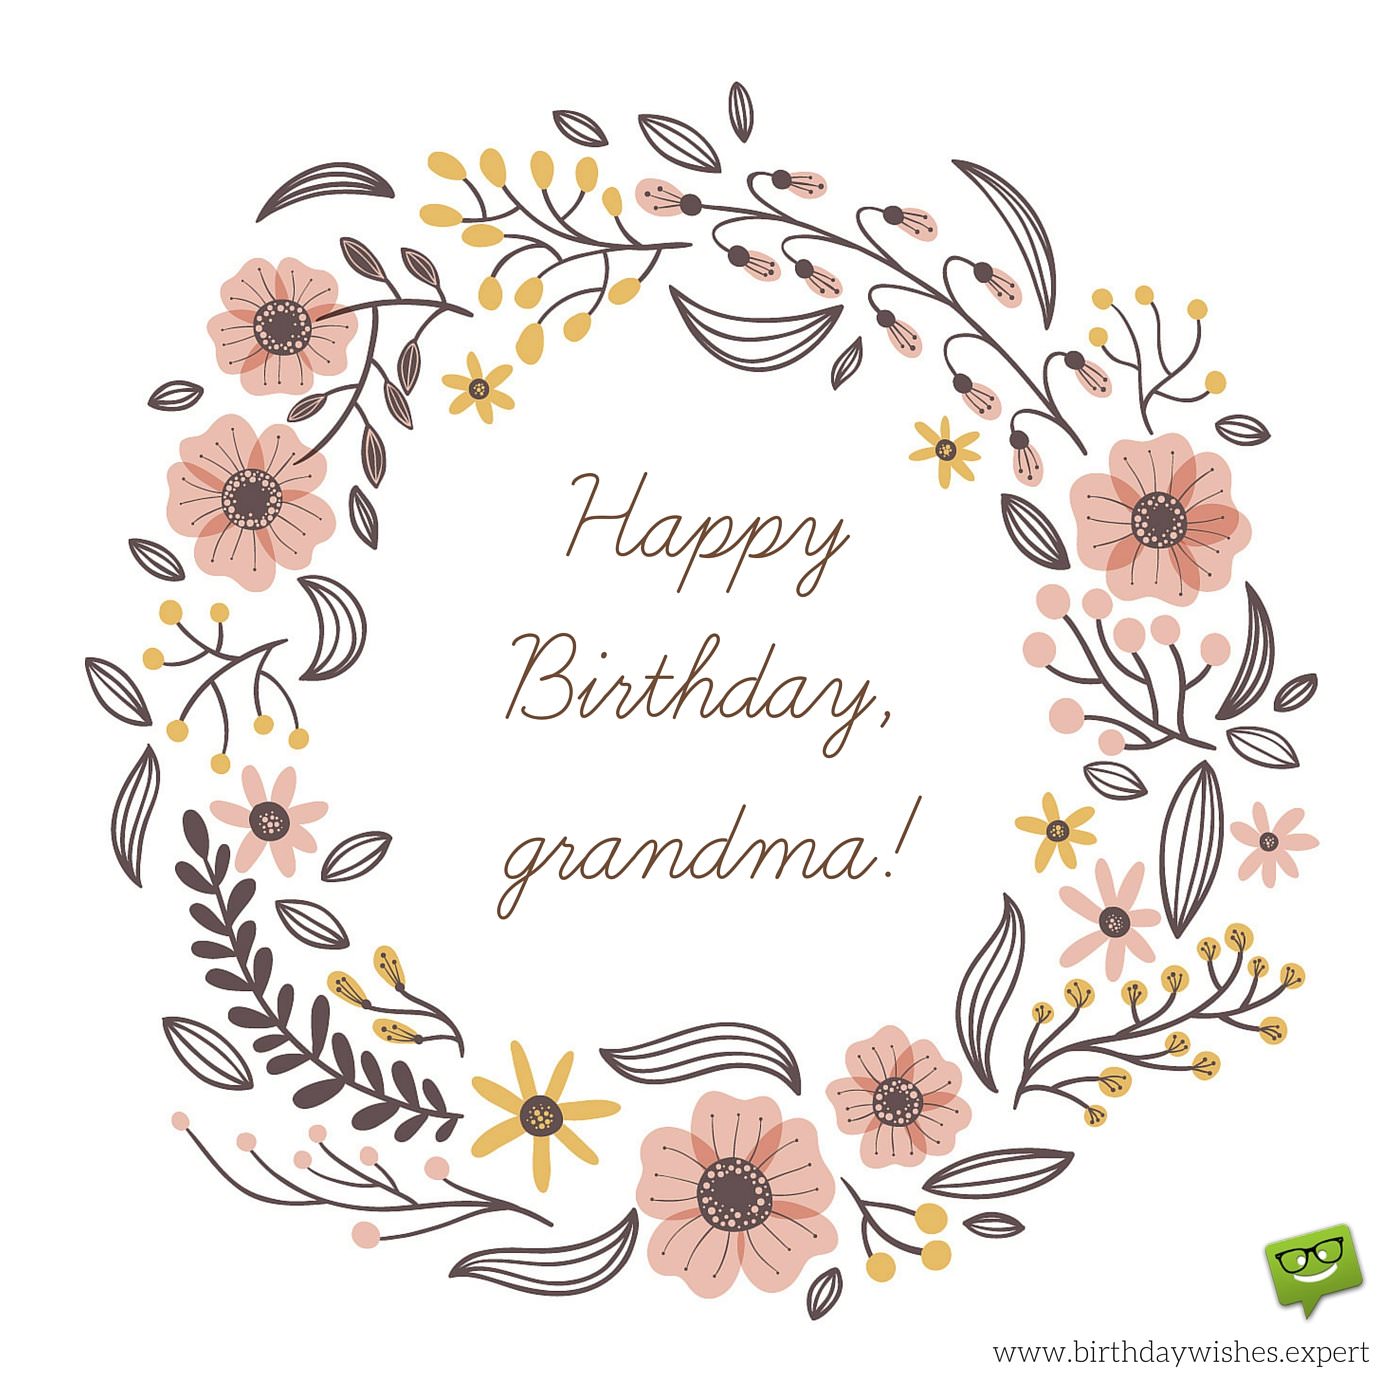 Happy Birthday, Grandma! | Warm Wishes for your Grandmother